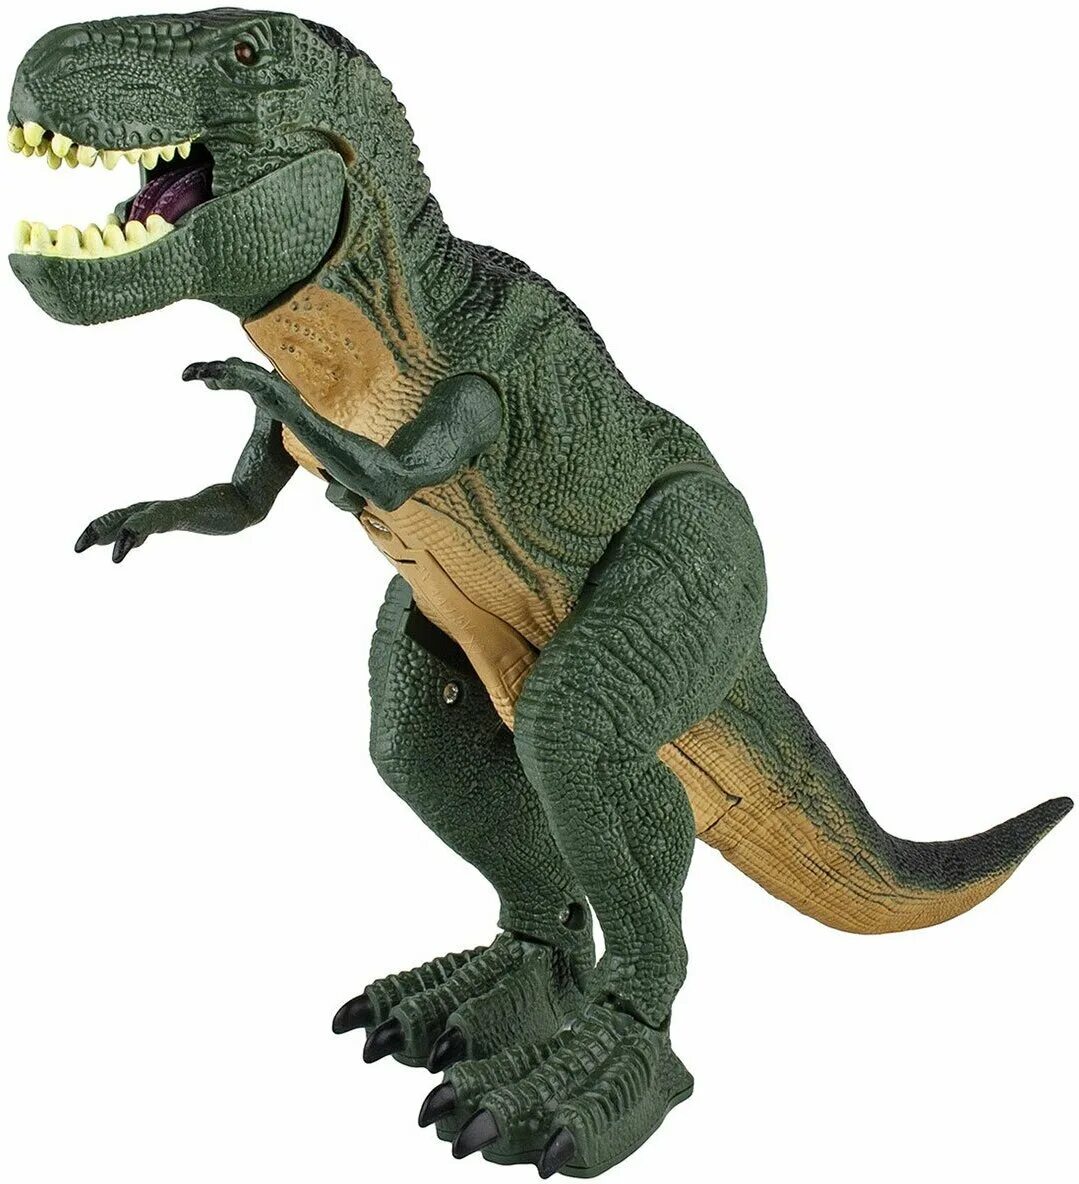 Динозавр Тирекс игрушка. Тираннозавр рекс игрушка интерактивная. Игрушка динозавр Тиранозавр. Динозавр Тирекс игрушка большая.